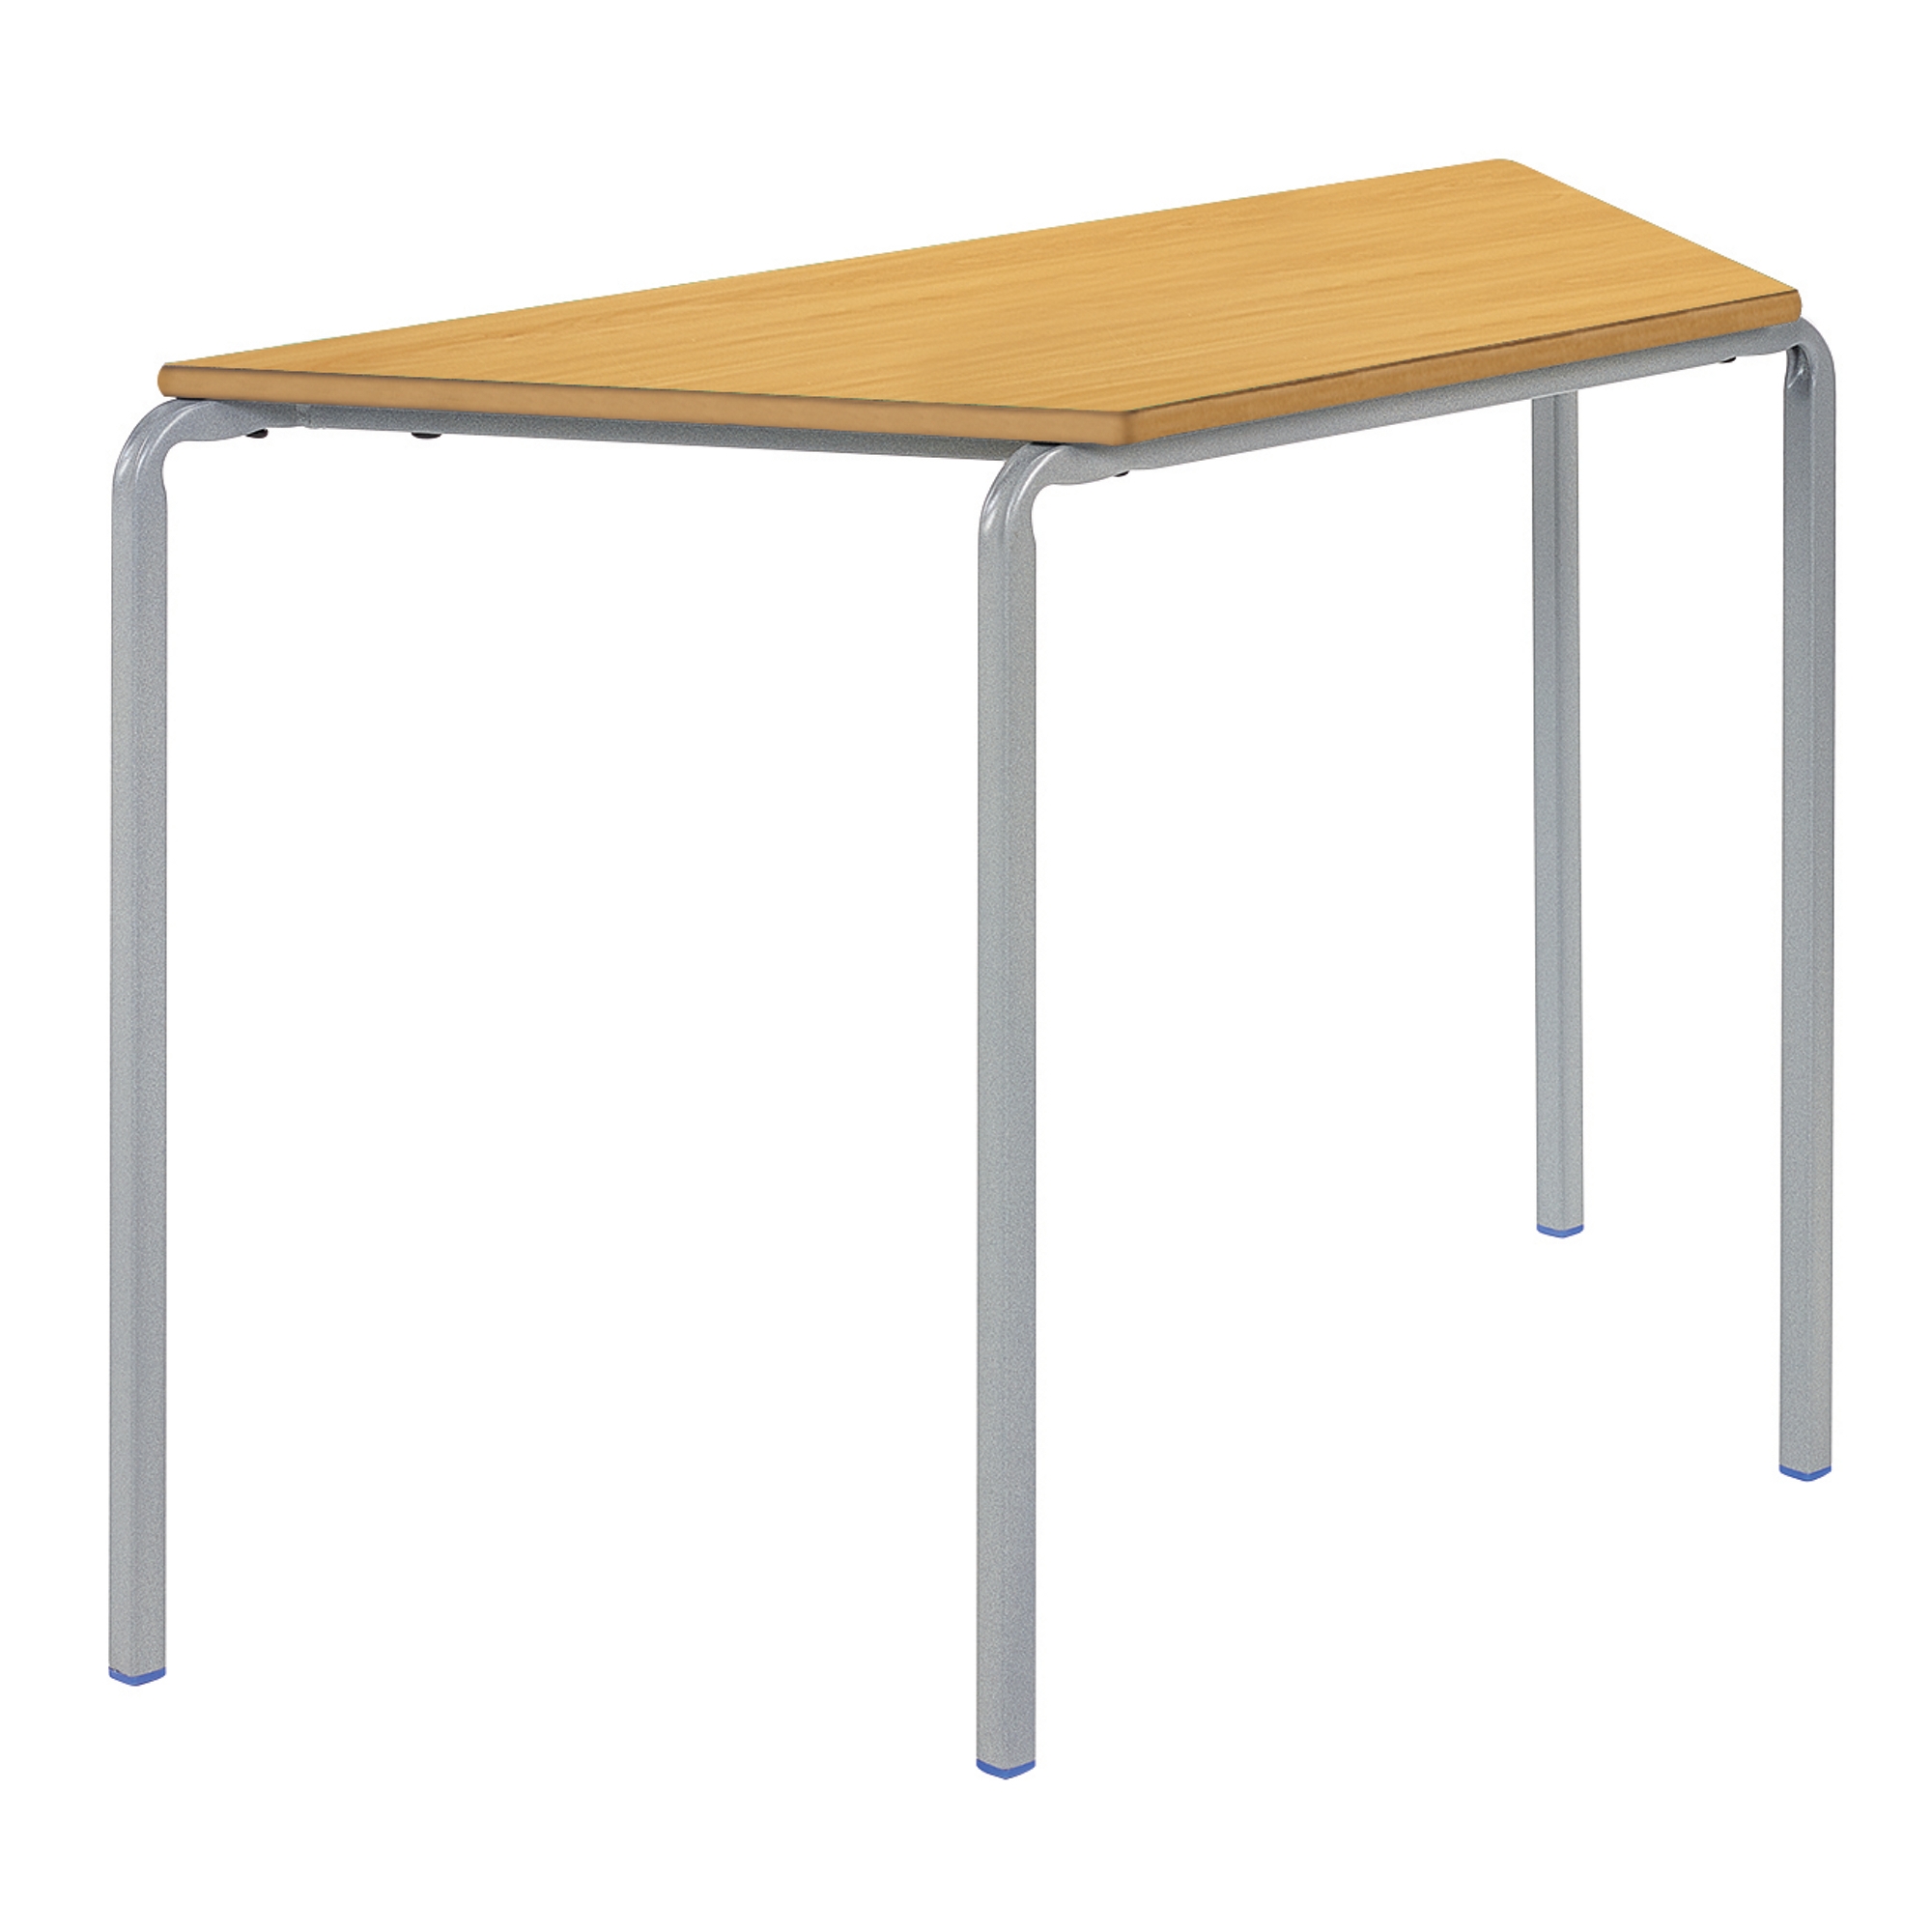 Classmates Trapezoidal Crushed Bent Classroom Table - 1100 x 550 x 460mm - Beech